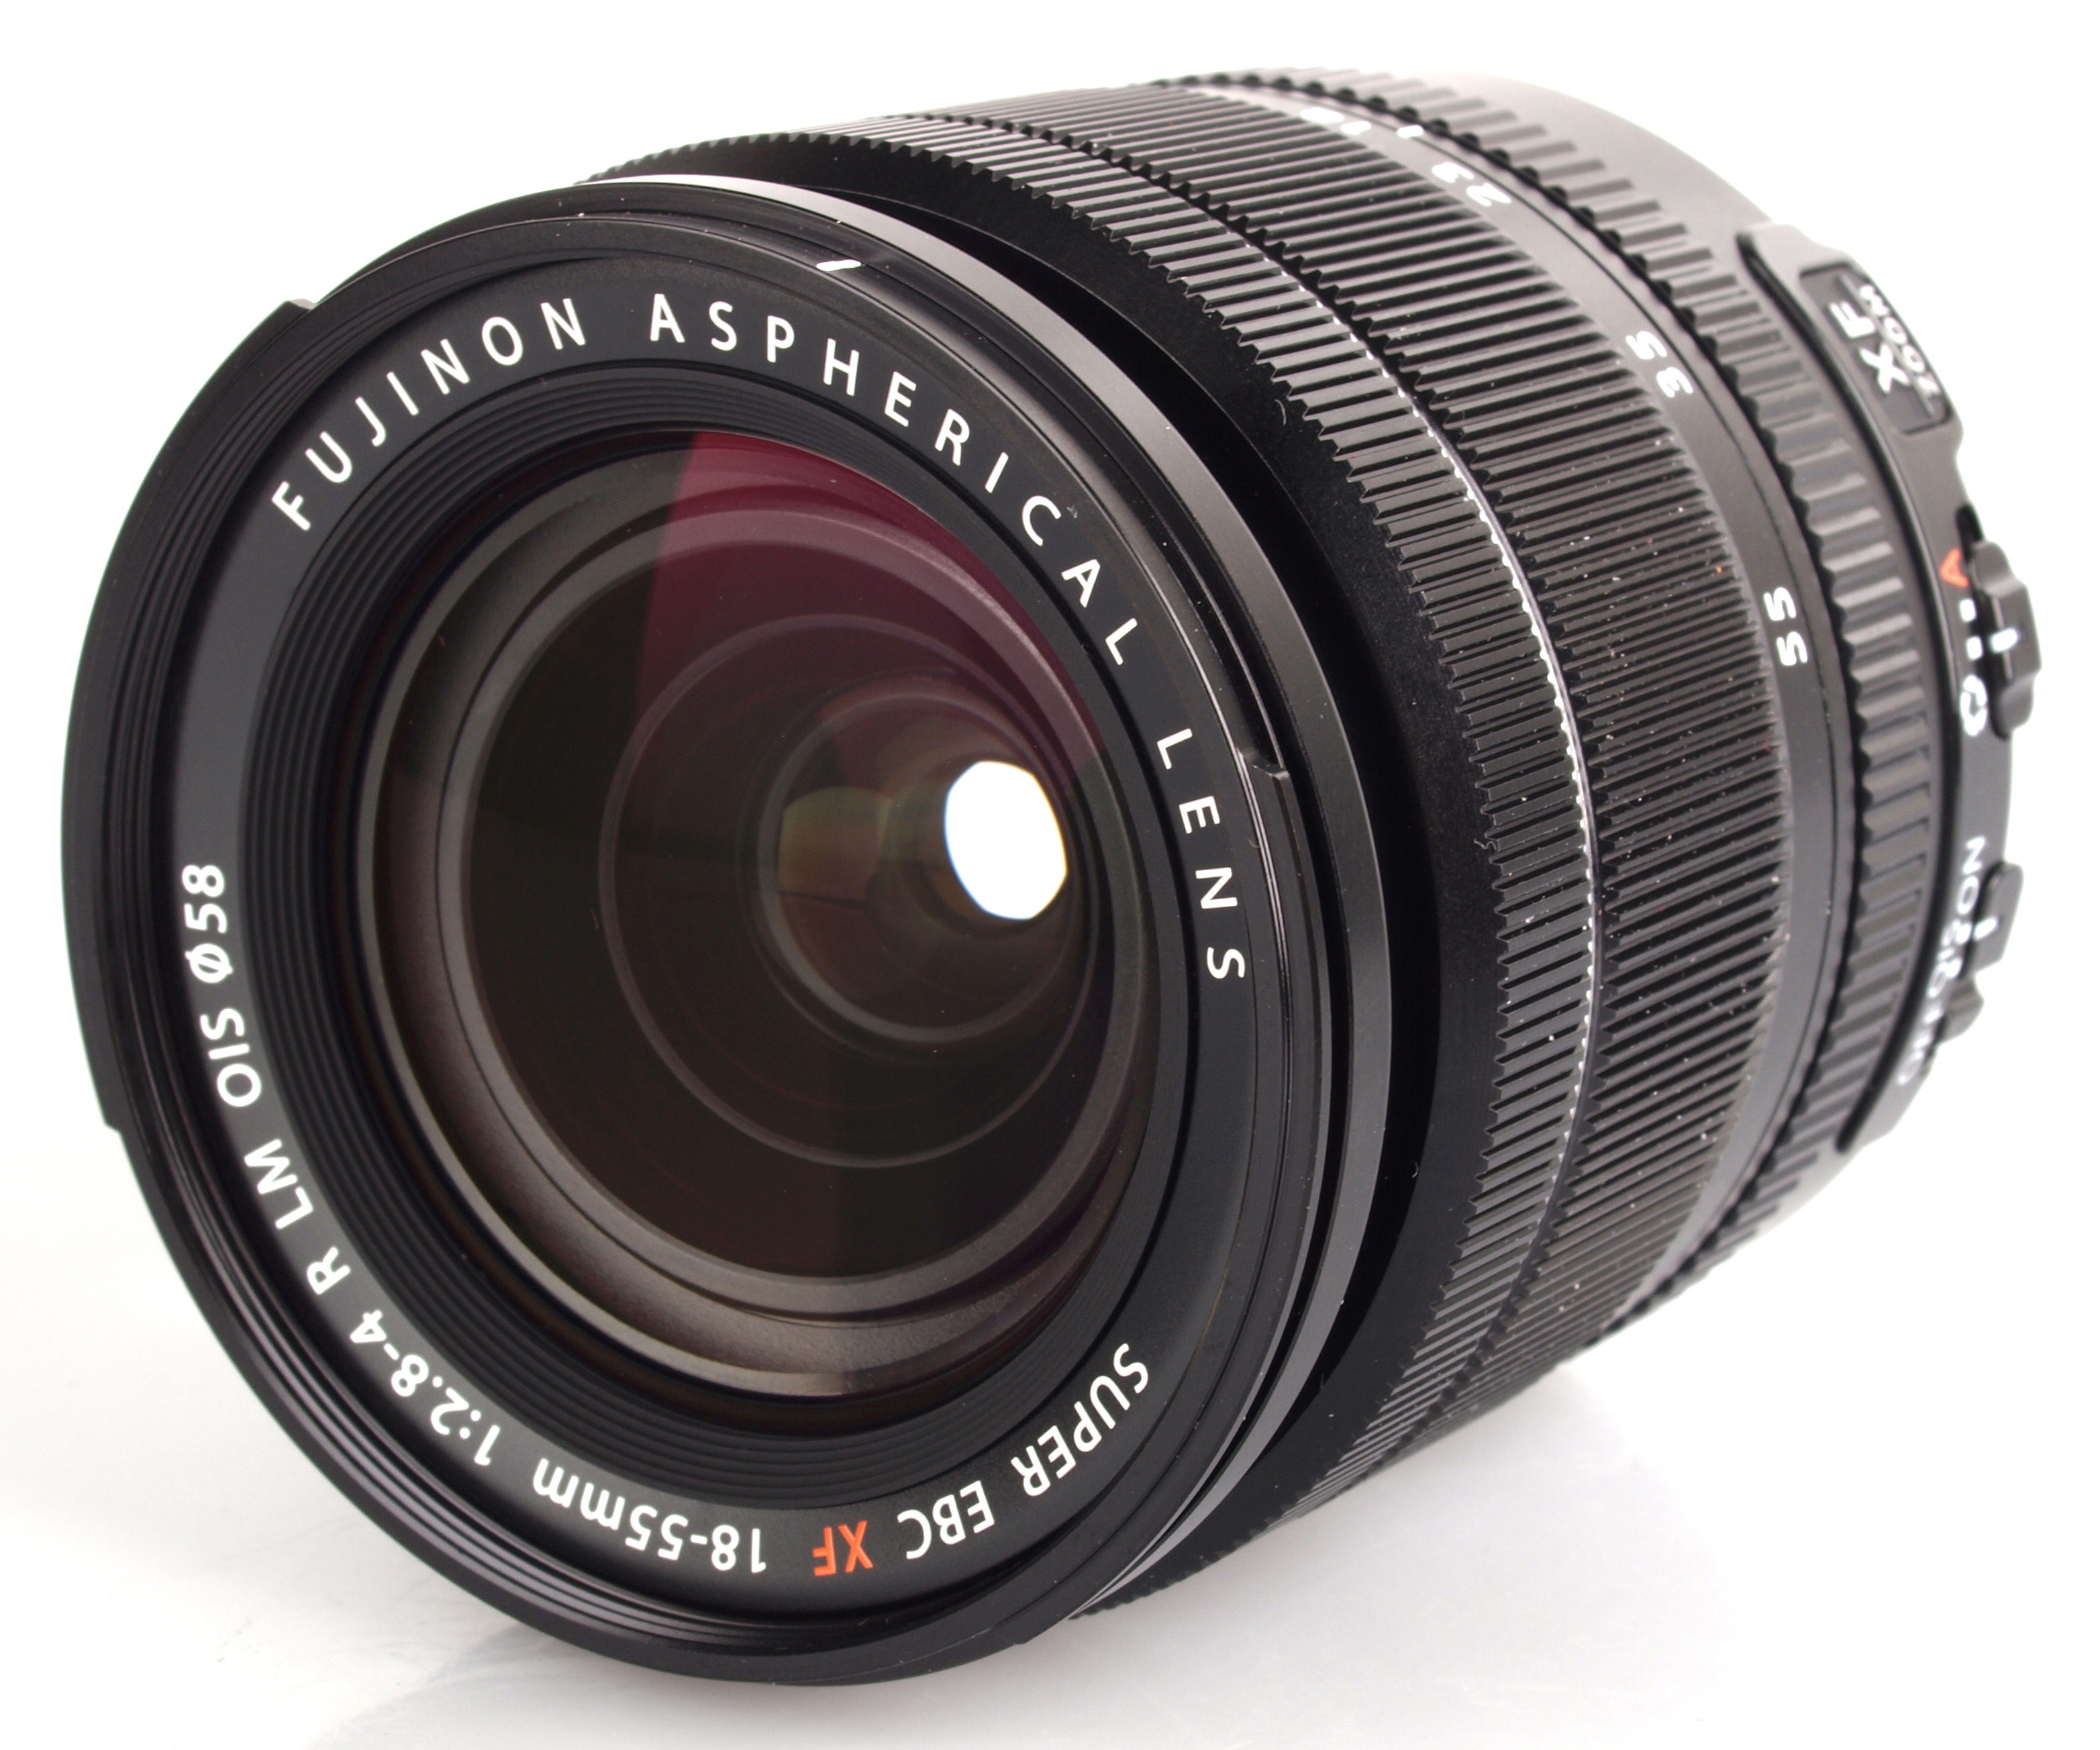 Big Fujifilm lens test: Fujinon XF 18-55mm F2.8-4 R LM OIS